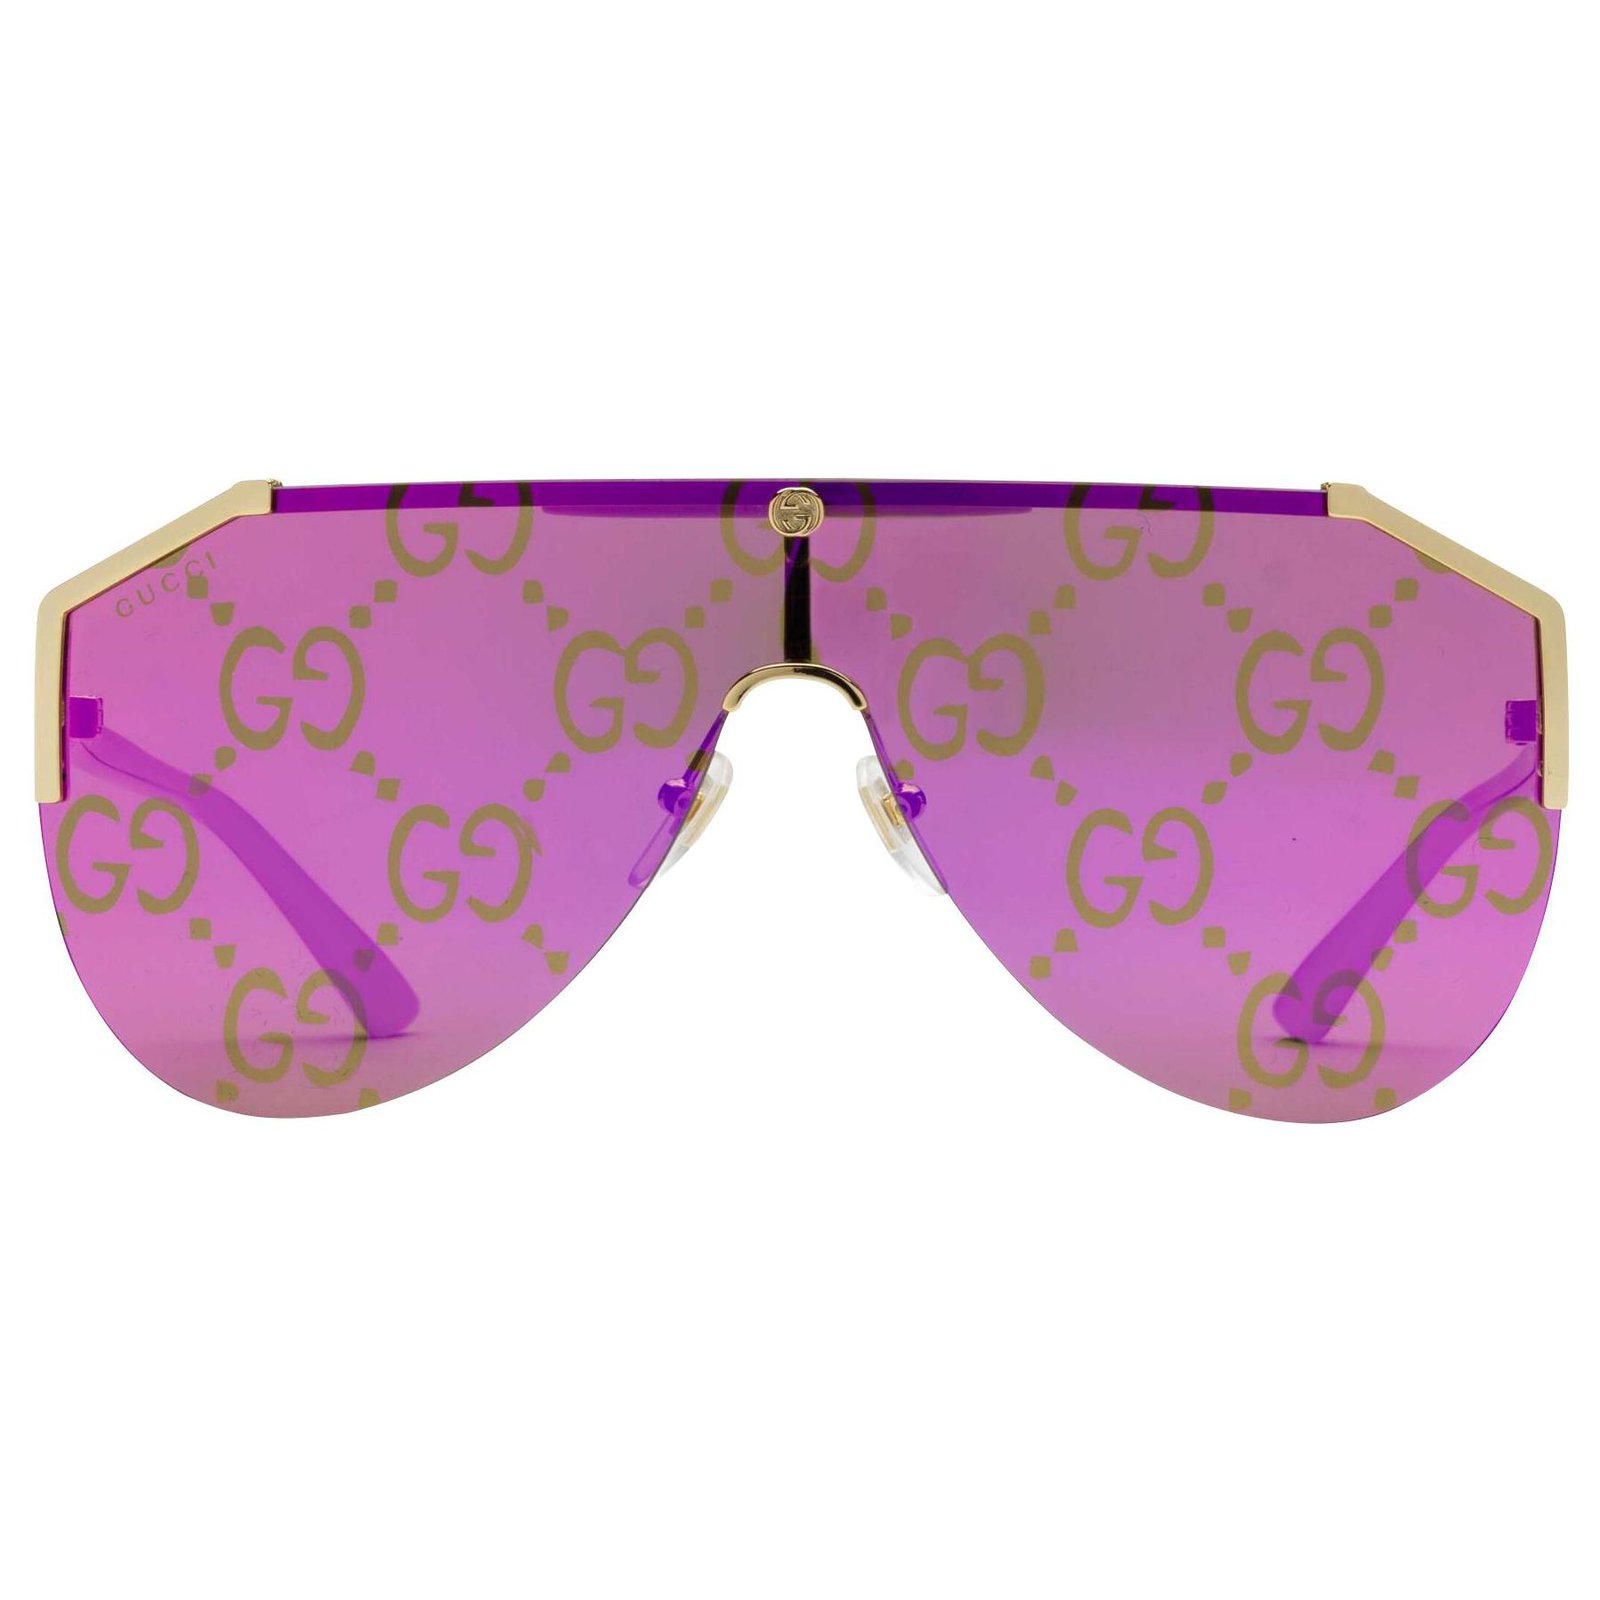 new collection gucci sunglasses